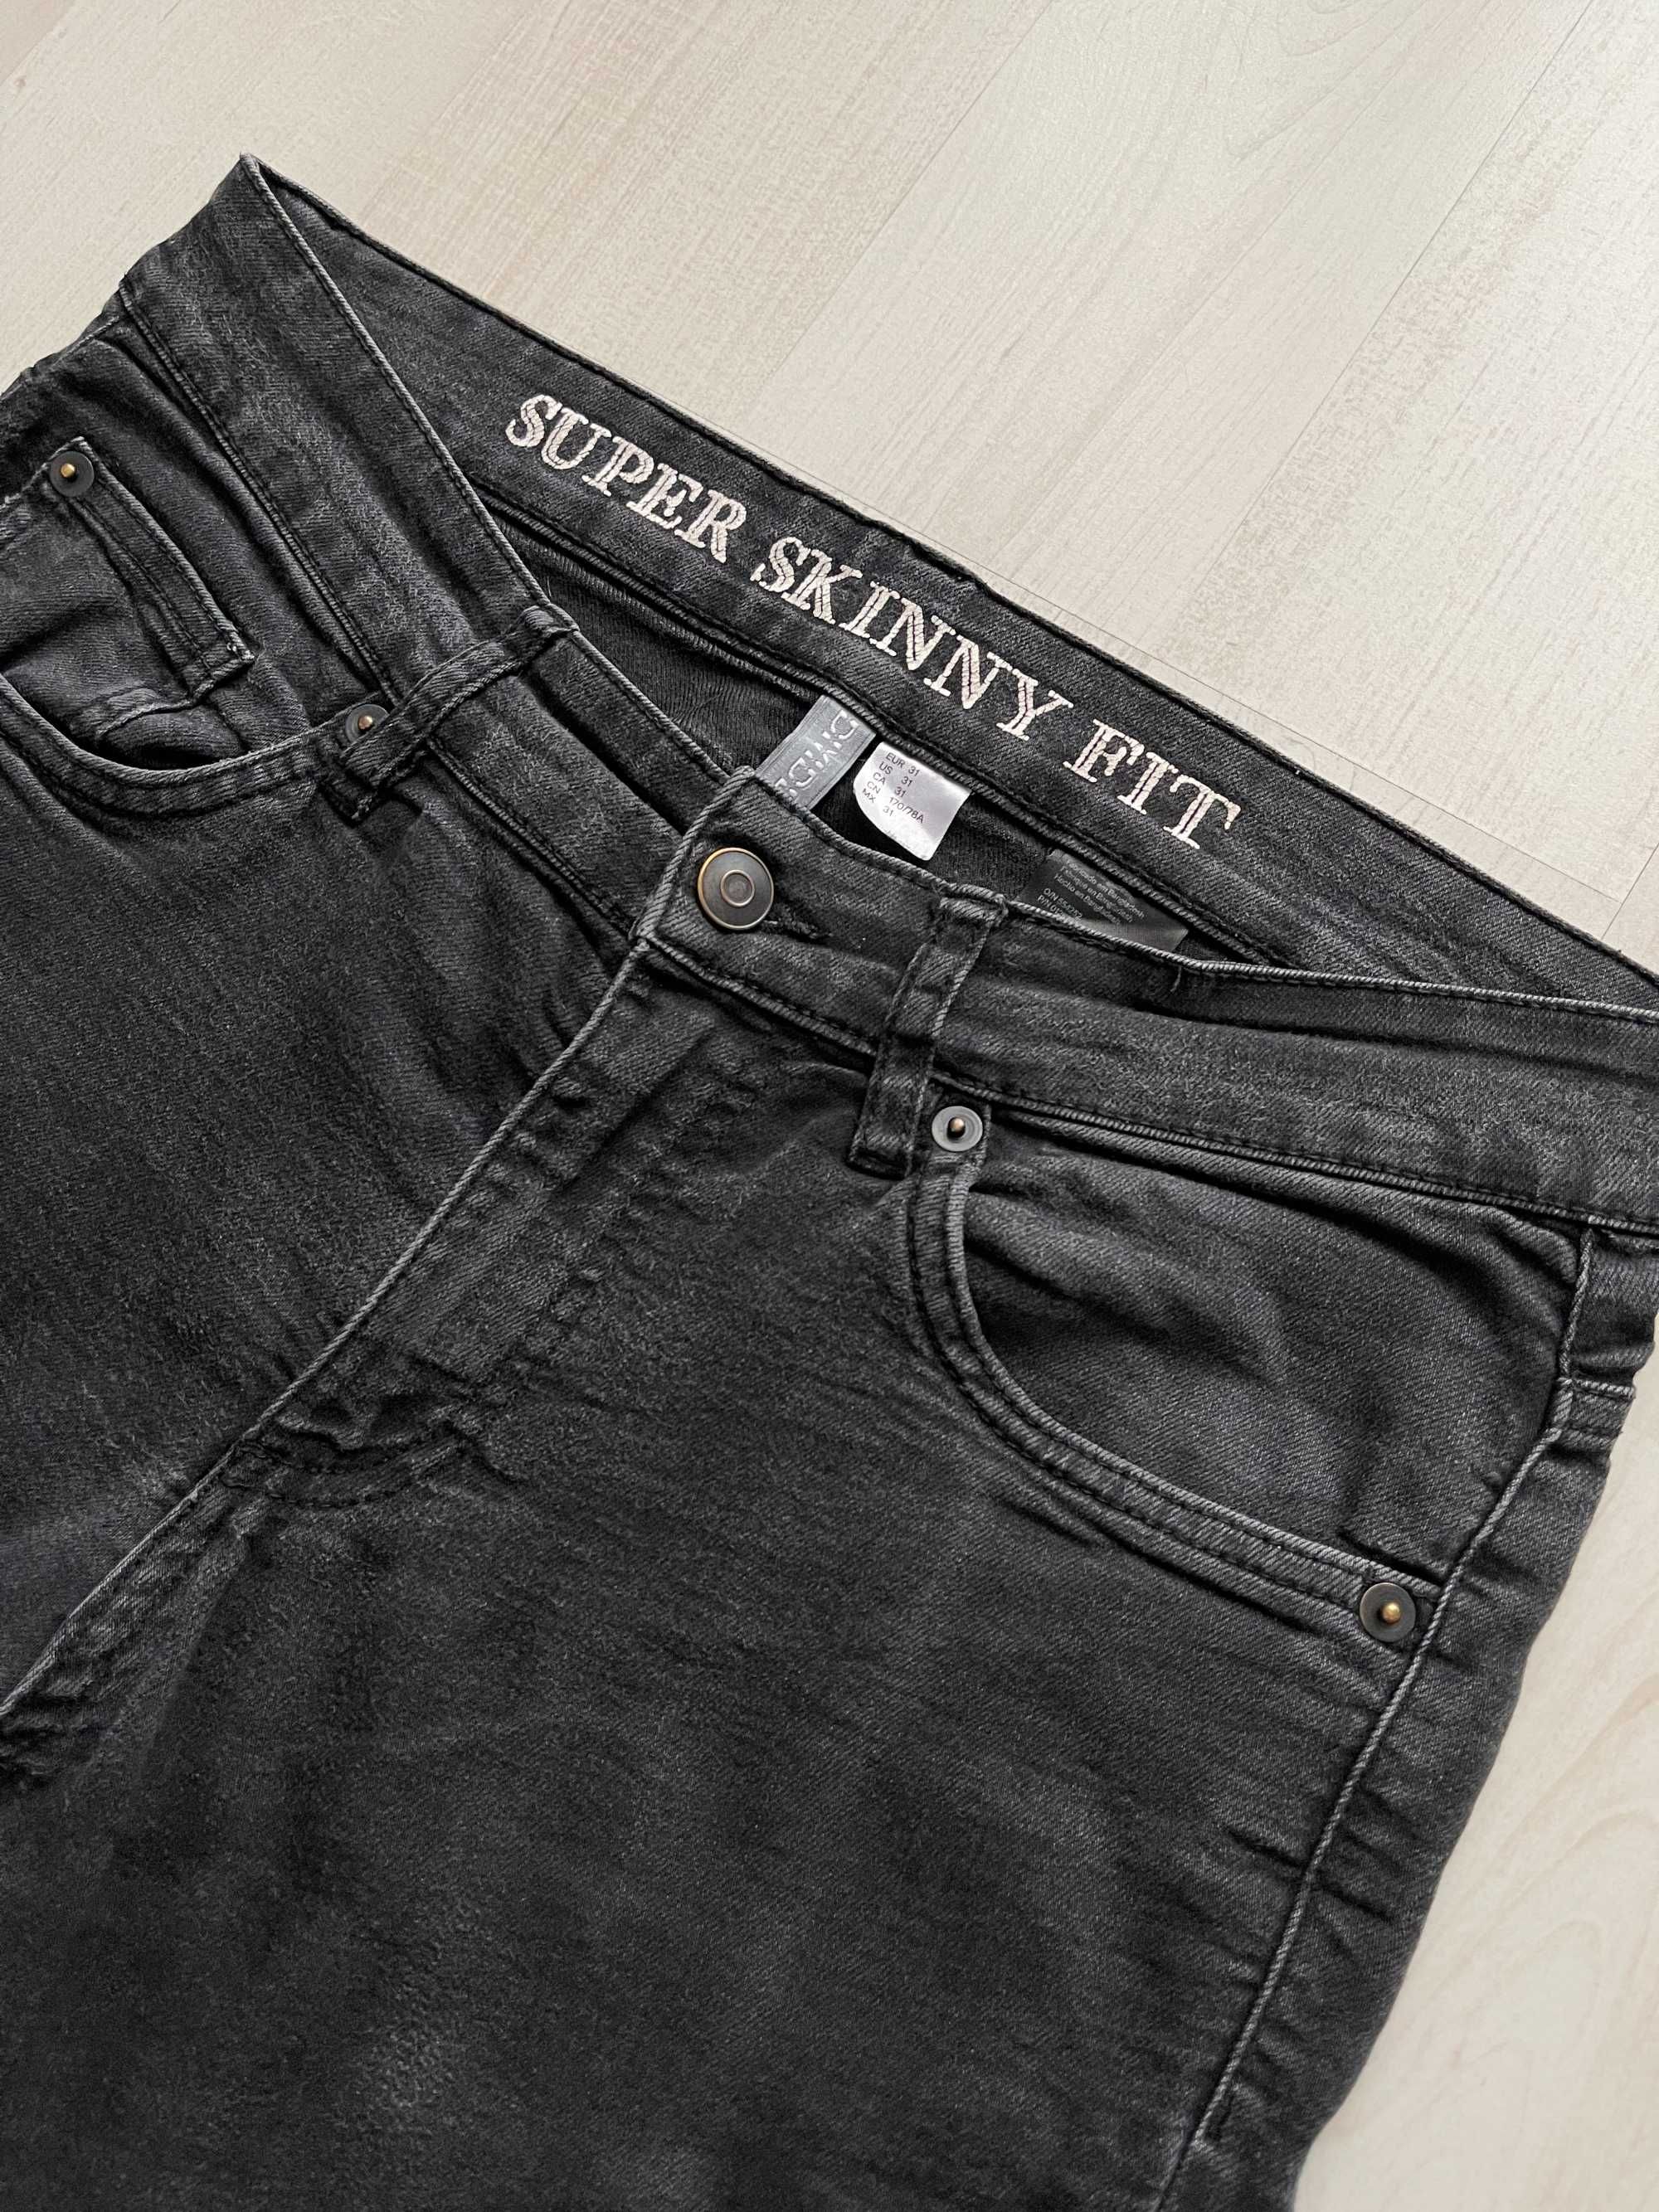 H&M Divided super skinny fit spodnie rurki slim fit rozmiar M